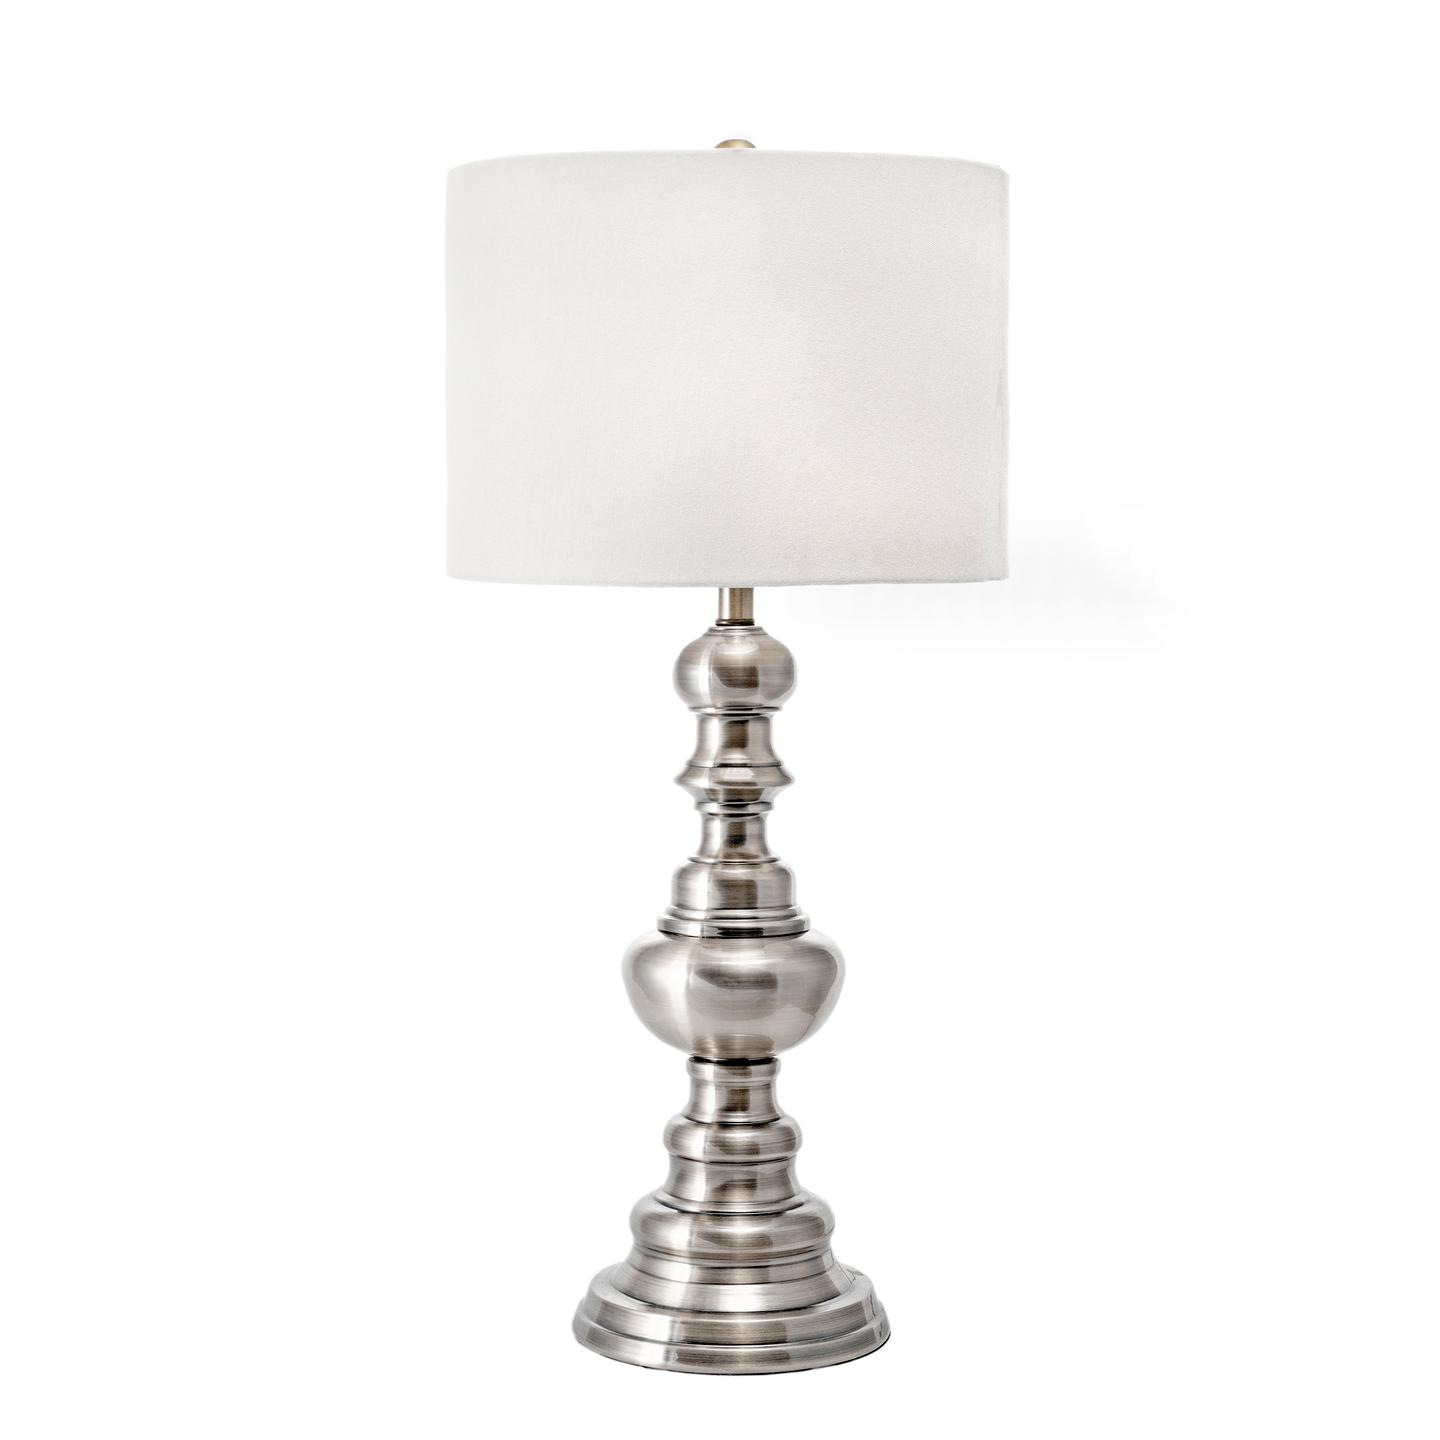 Fairlee Brass Candlestick Table Lamp, Fairlee Antique Brass Candlestick Table Lamp